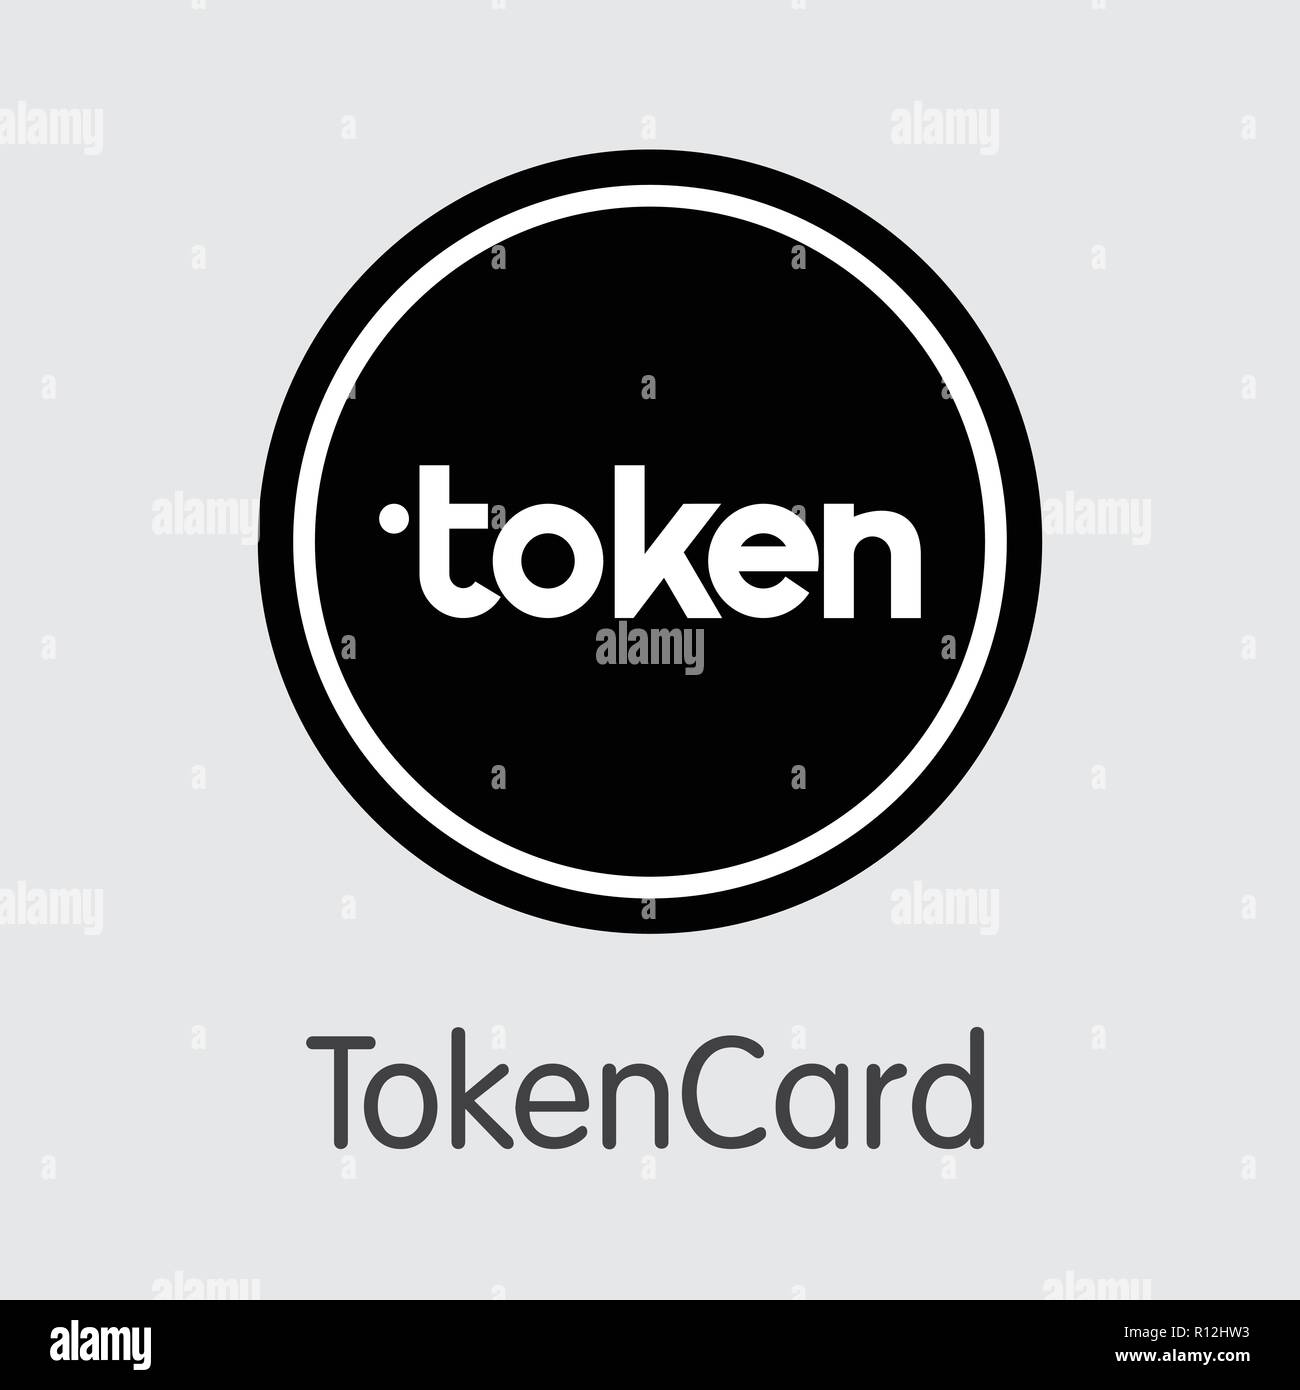 Tokencard Crypto Currency Coin. Vector Symbol of TKN. Stock Vector